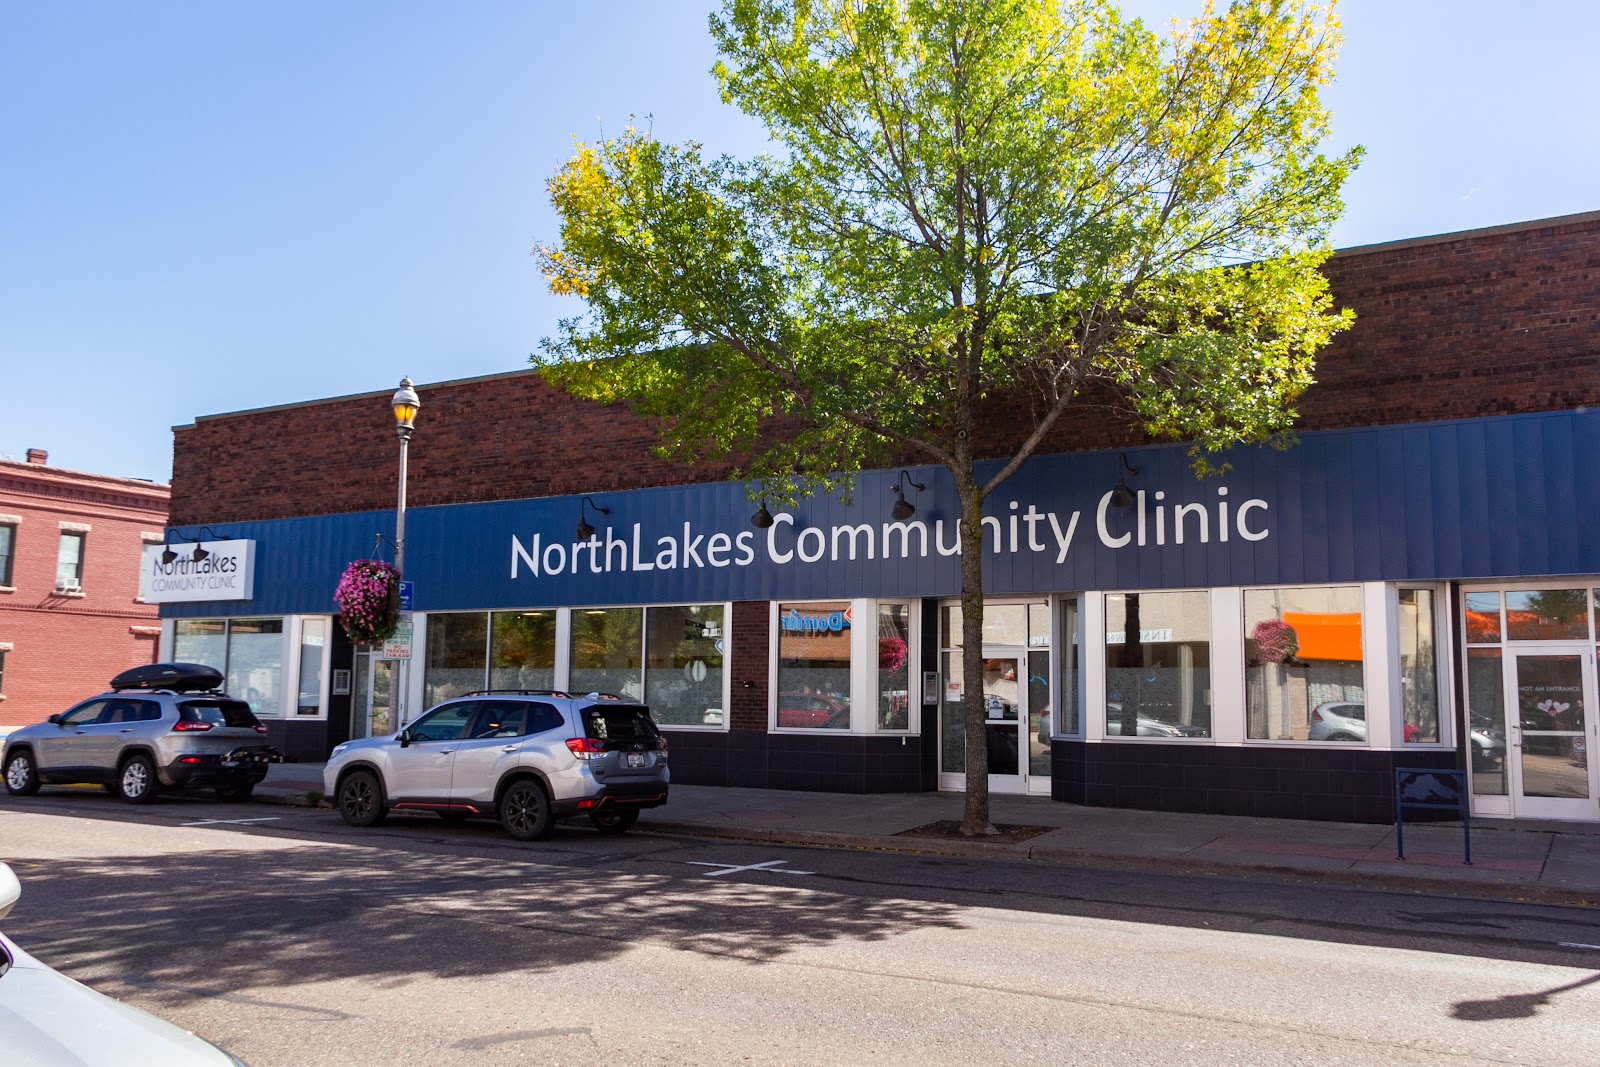 NorthLakes Community Clinic